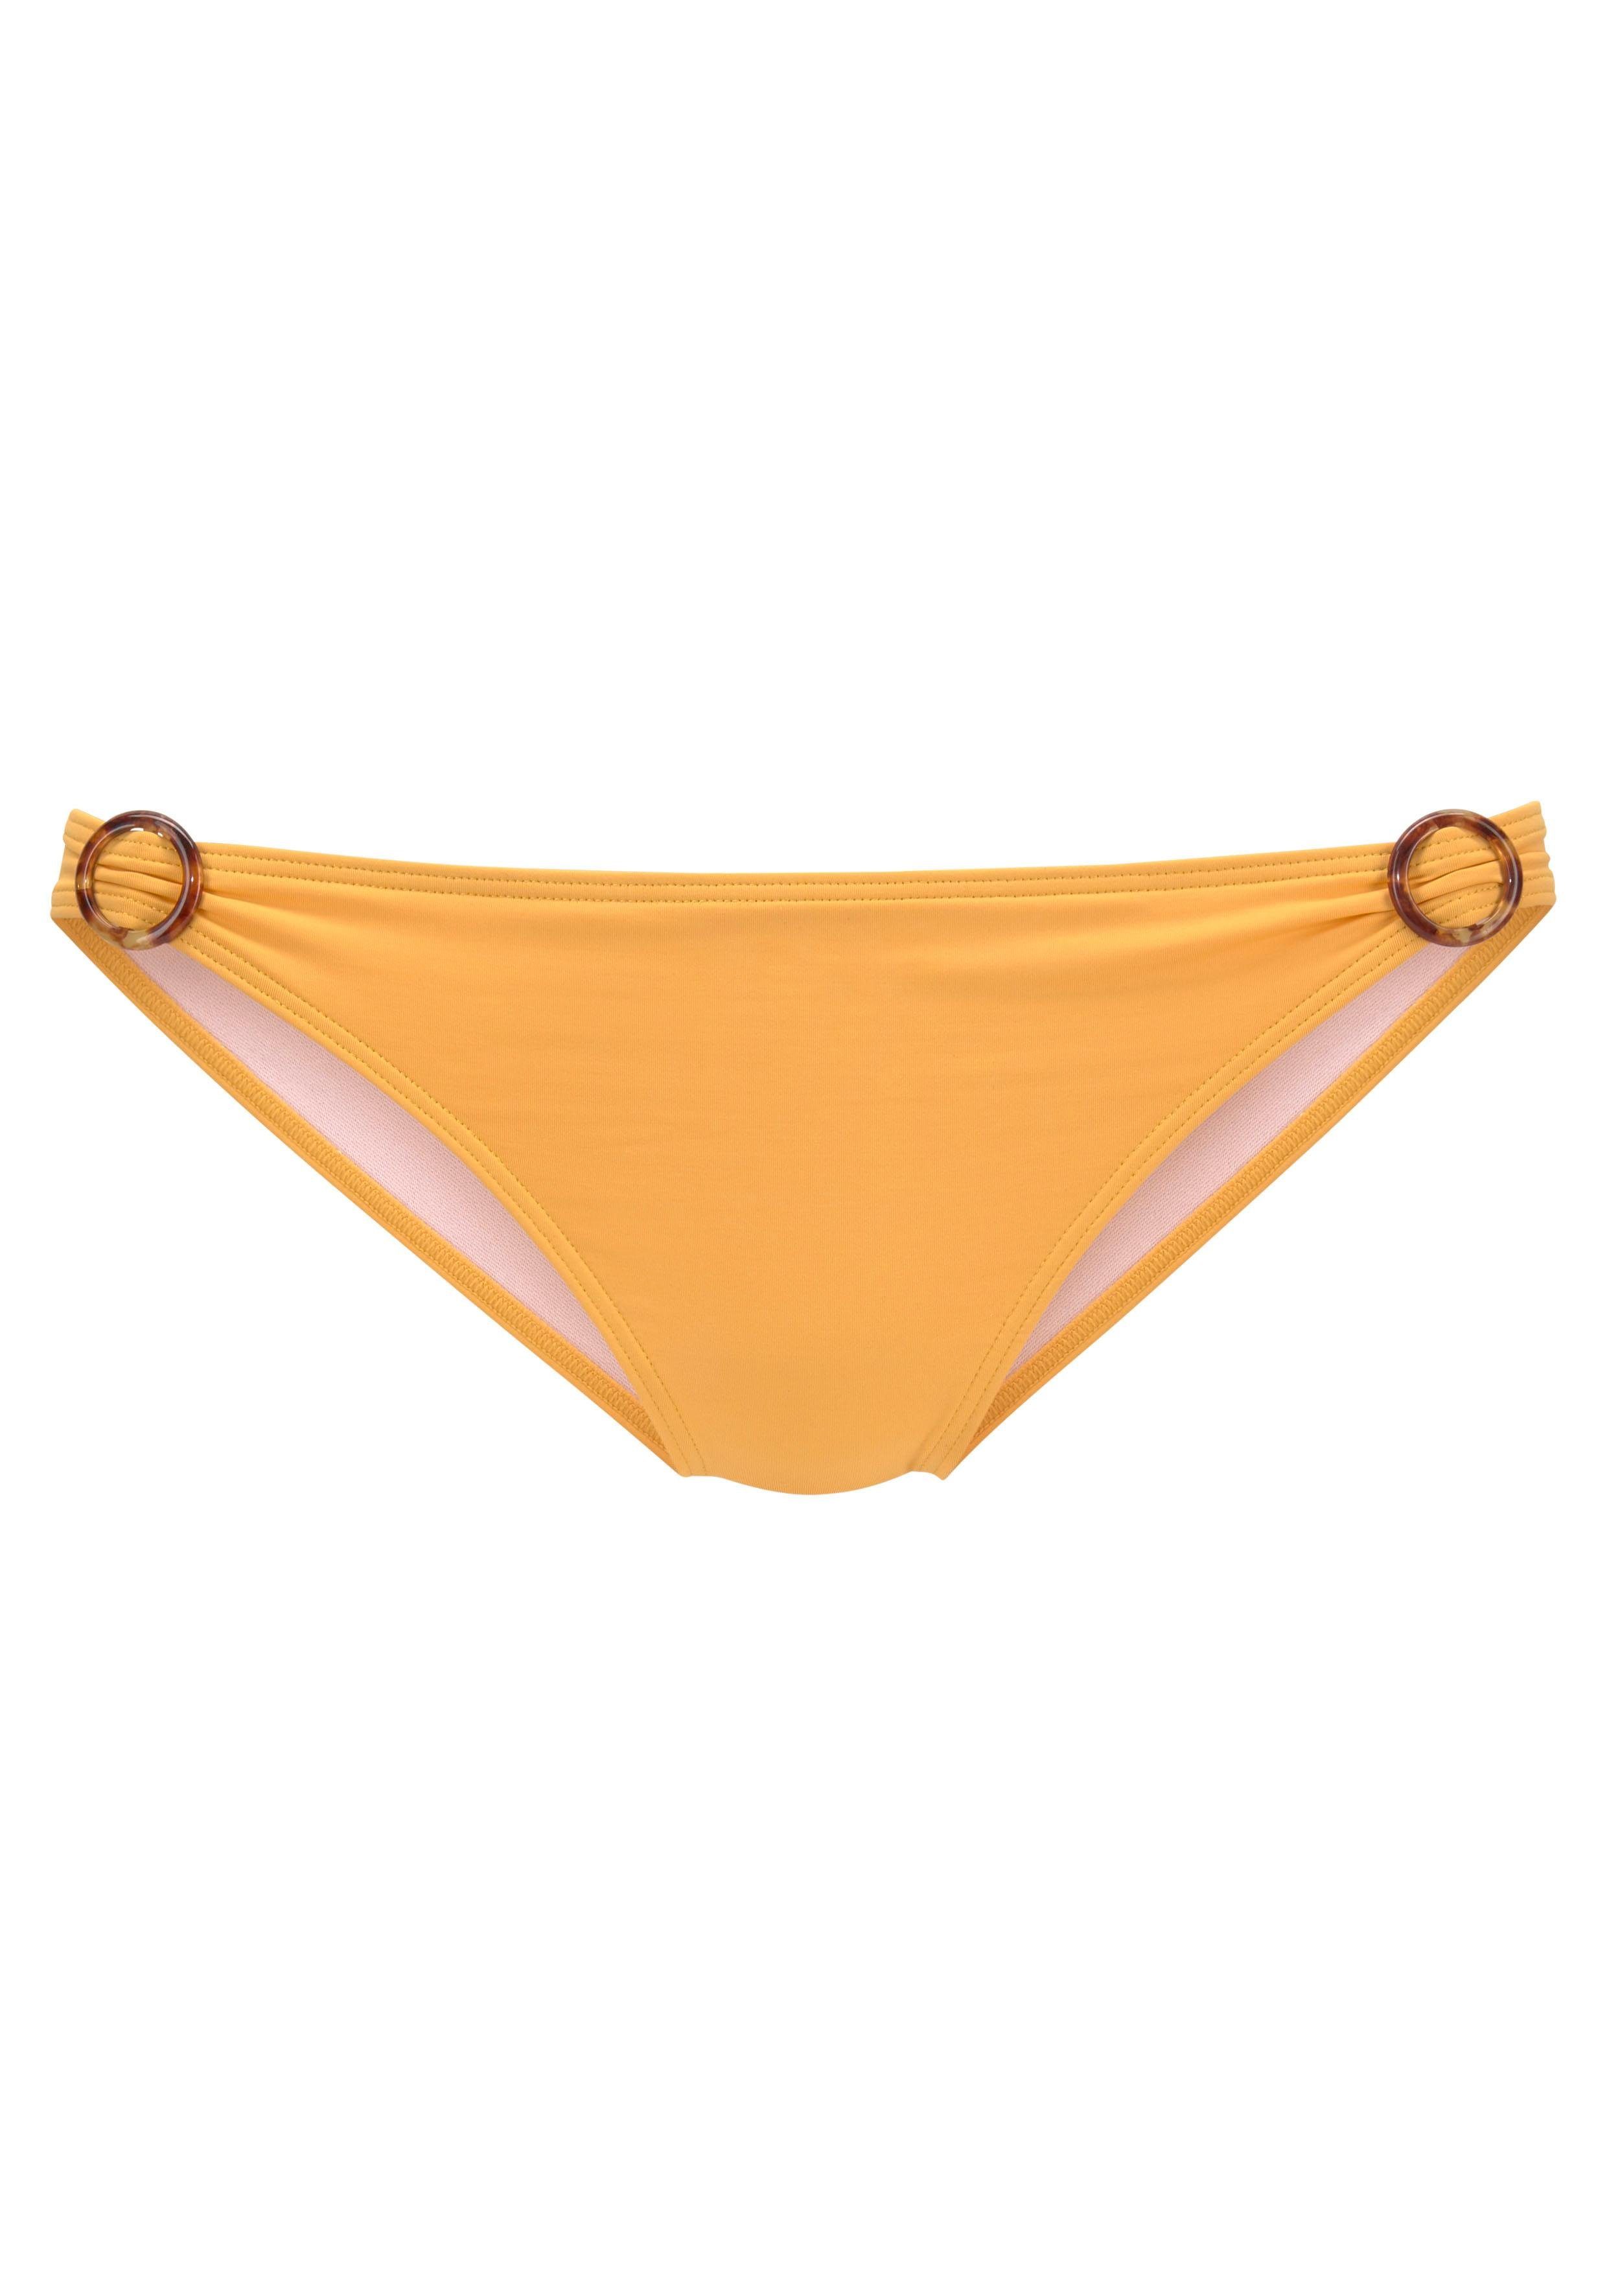 s.oliver red label beachwear bikinibroekje rome met sierringen geel